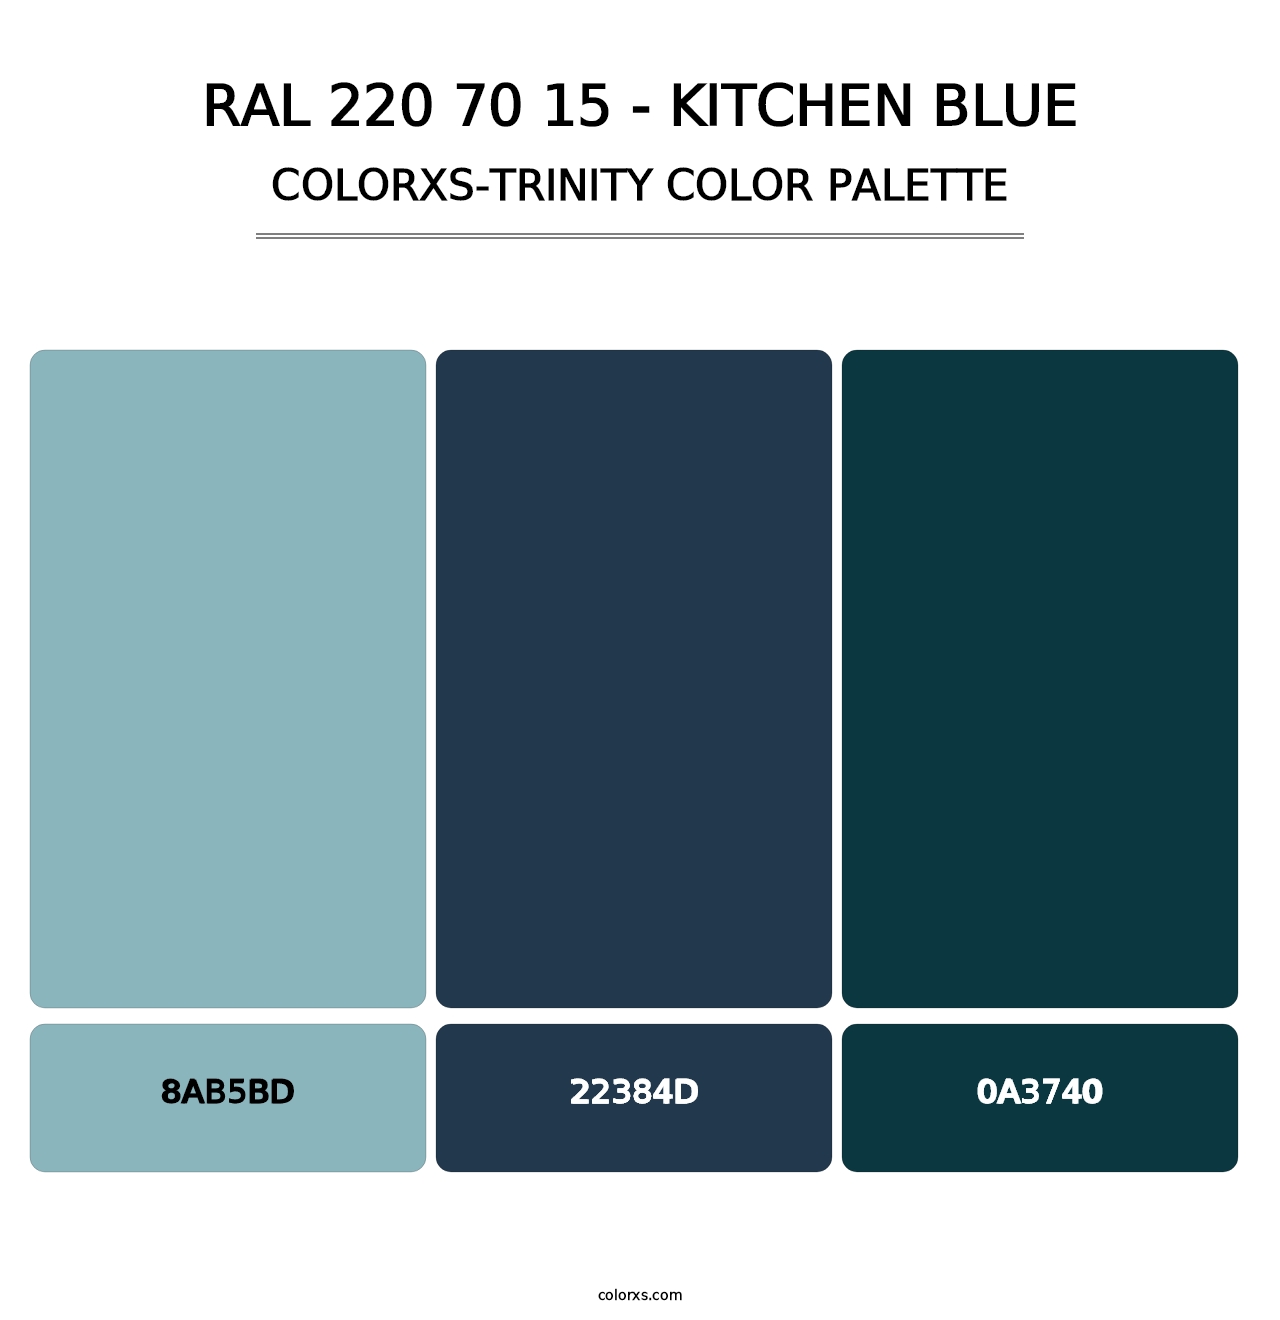 RAL 220 70 15 - Kitchen Blue - Colorxs Trinity Palette